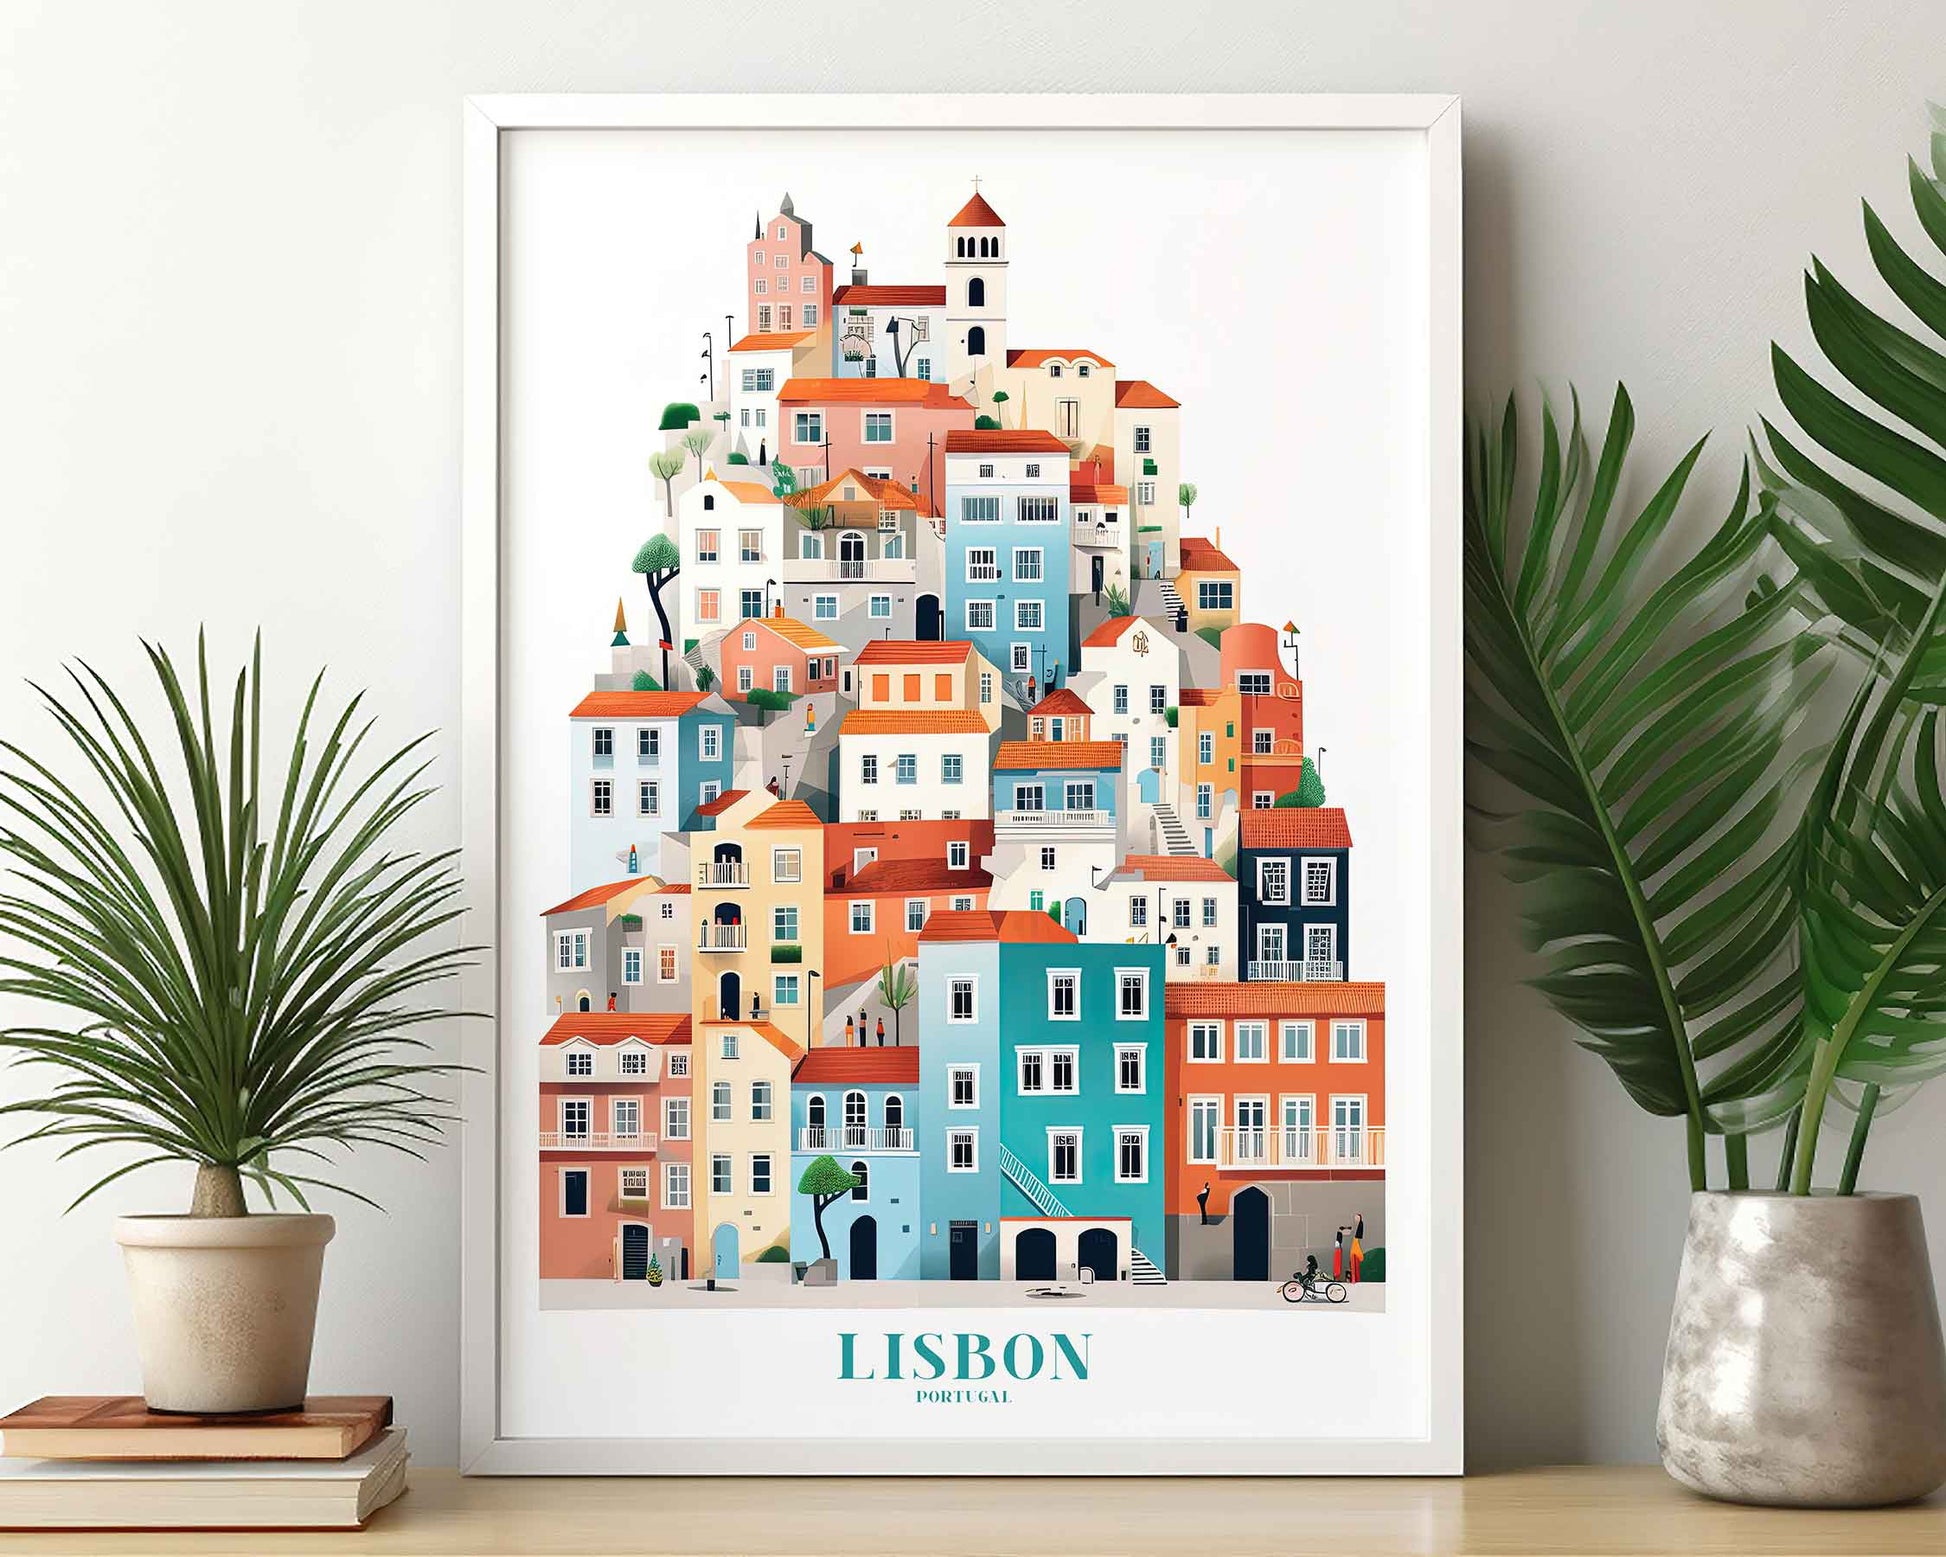 Framed Image of Lisbon Portugal Travel Print Posters Illustration Wall Art